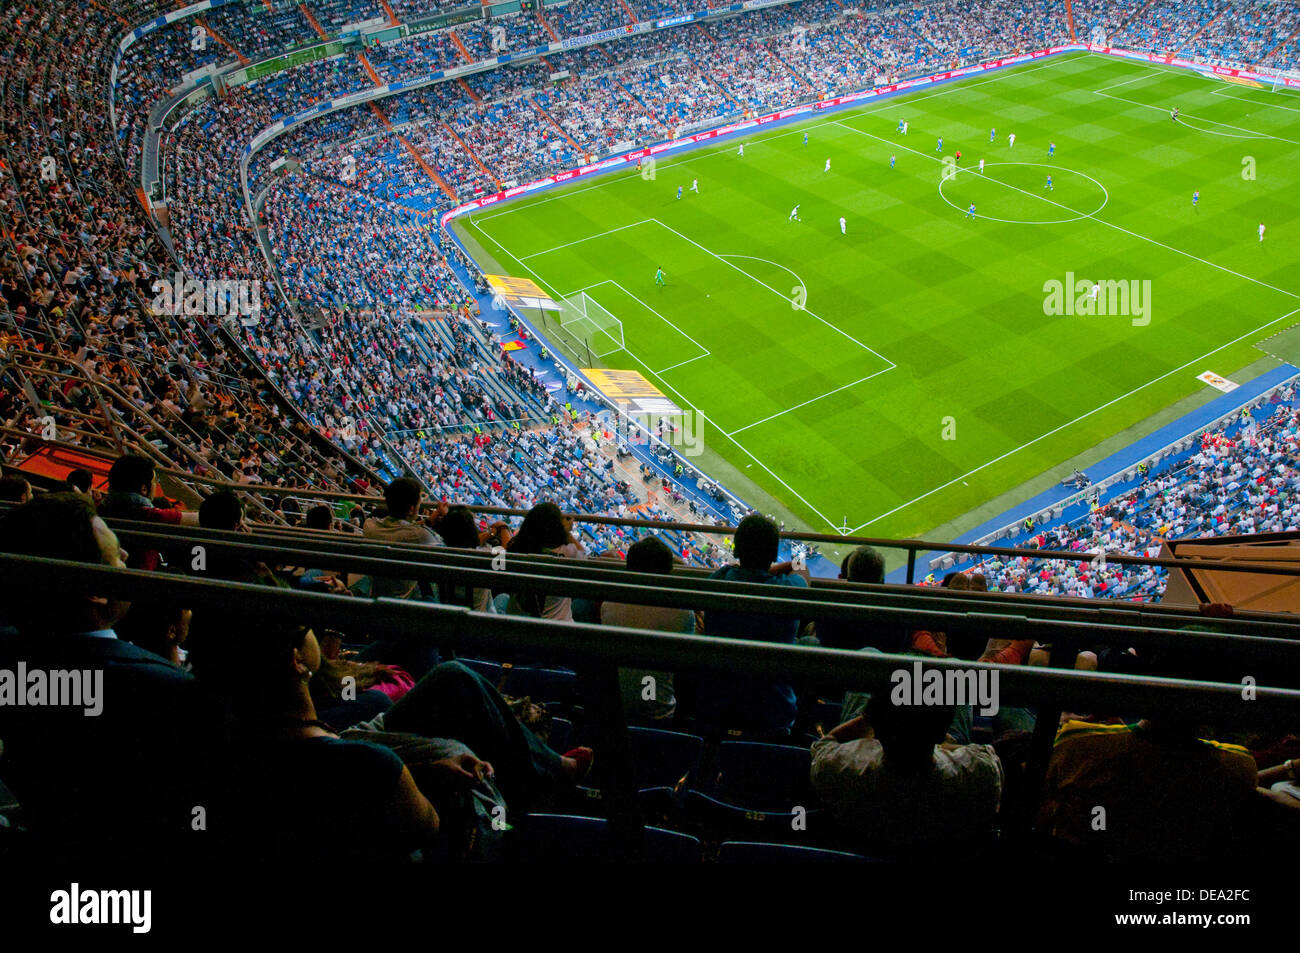 Real Madrid vs Getafe, partido de fútbol. Santiago Bernabeu, Madrid, España. Foto de stock